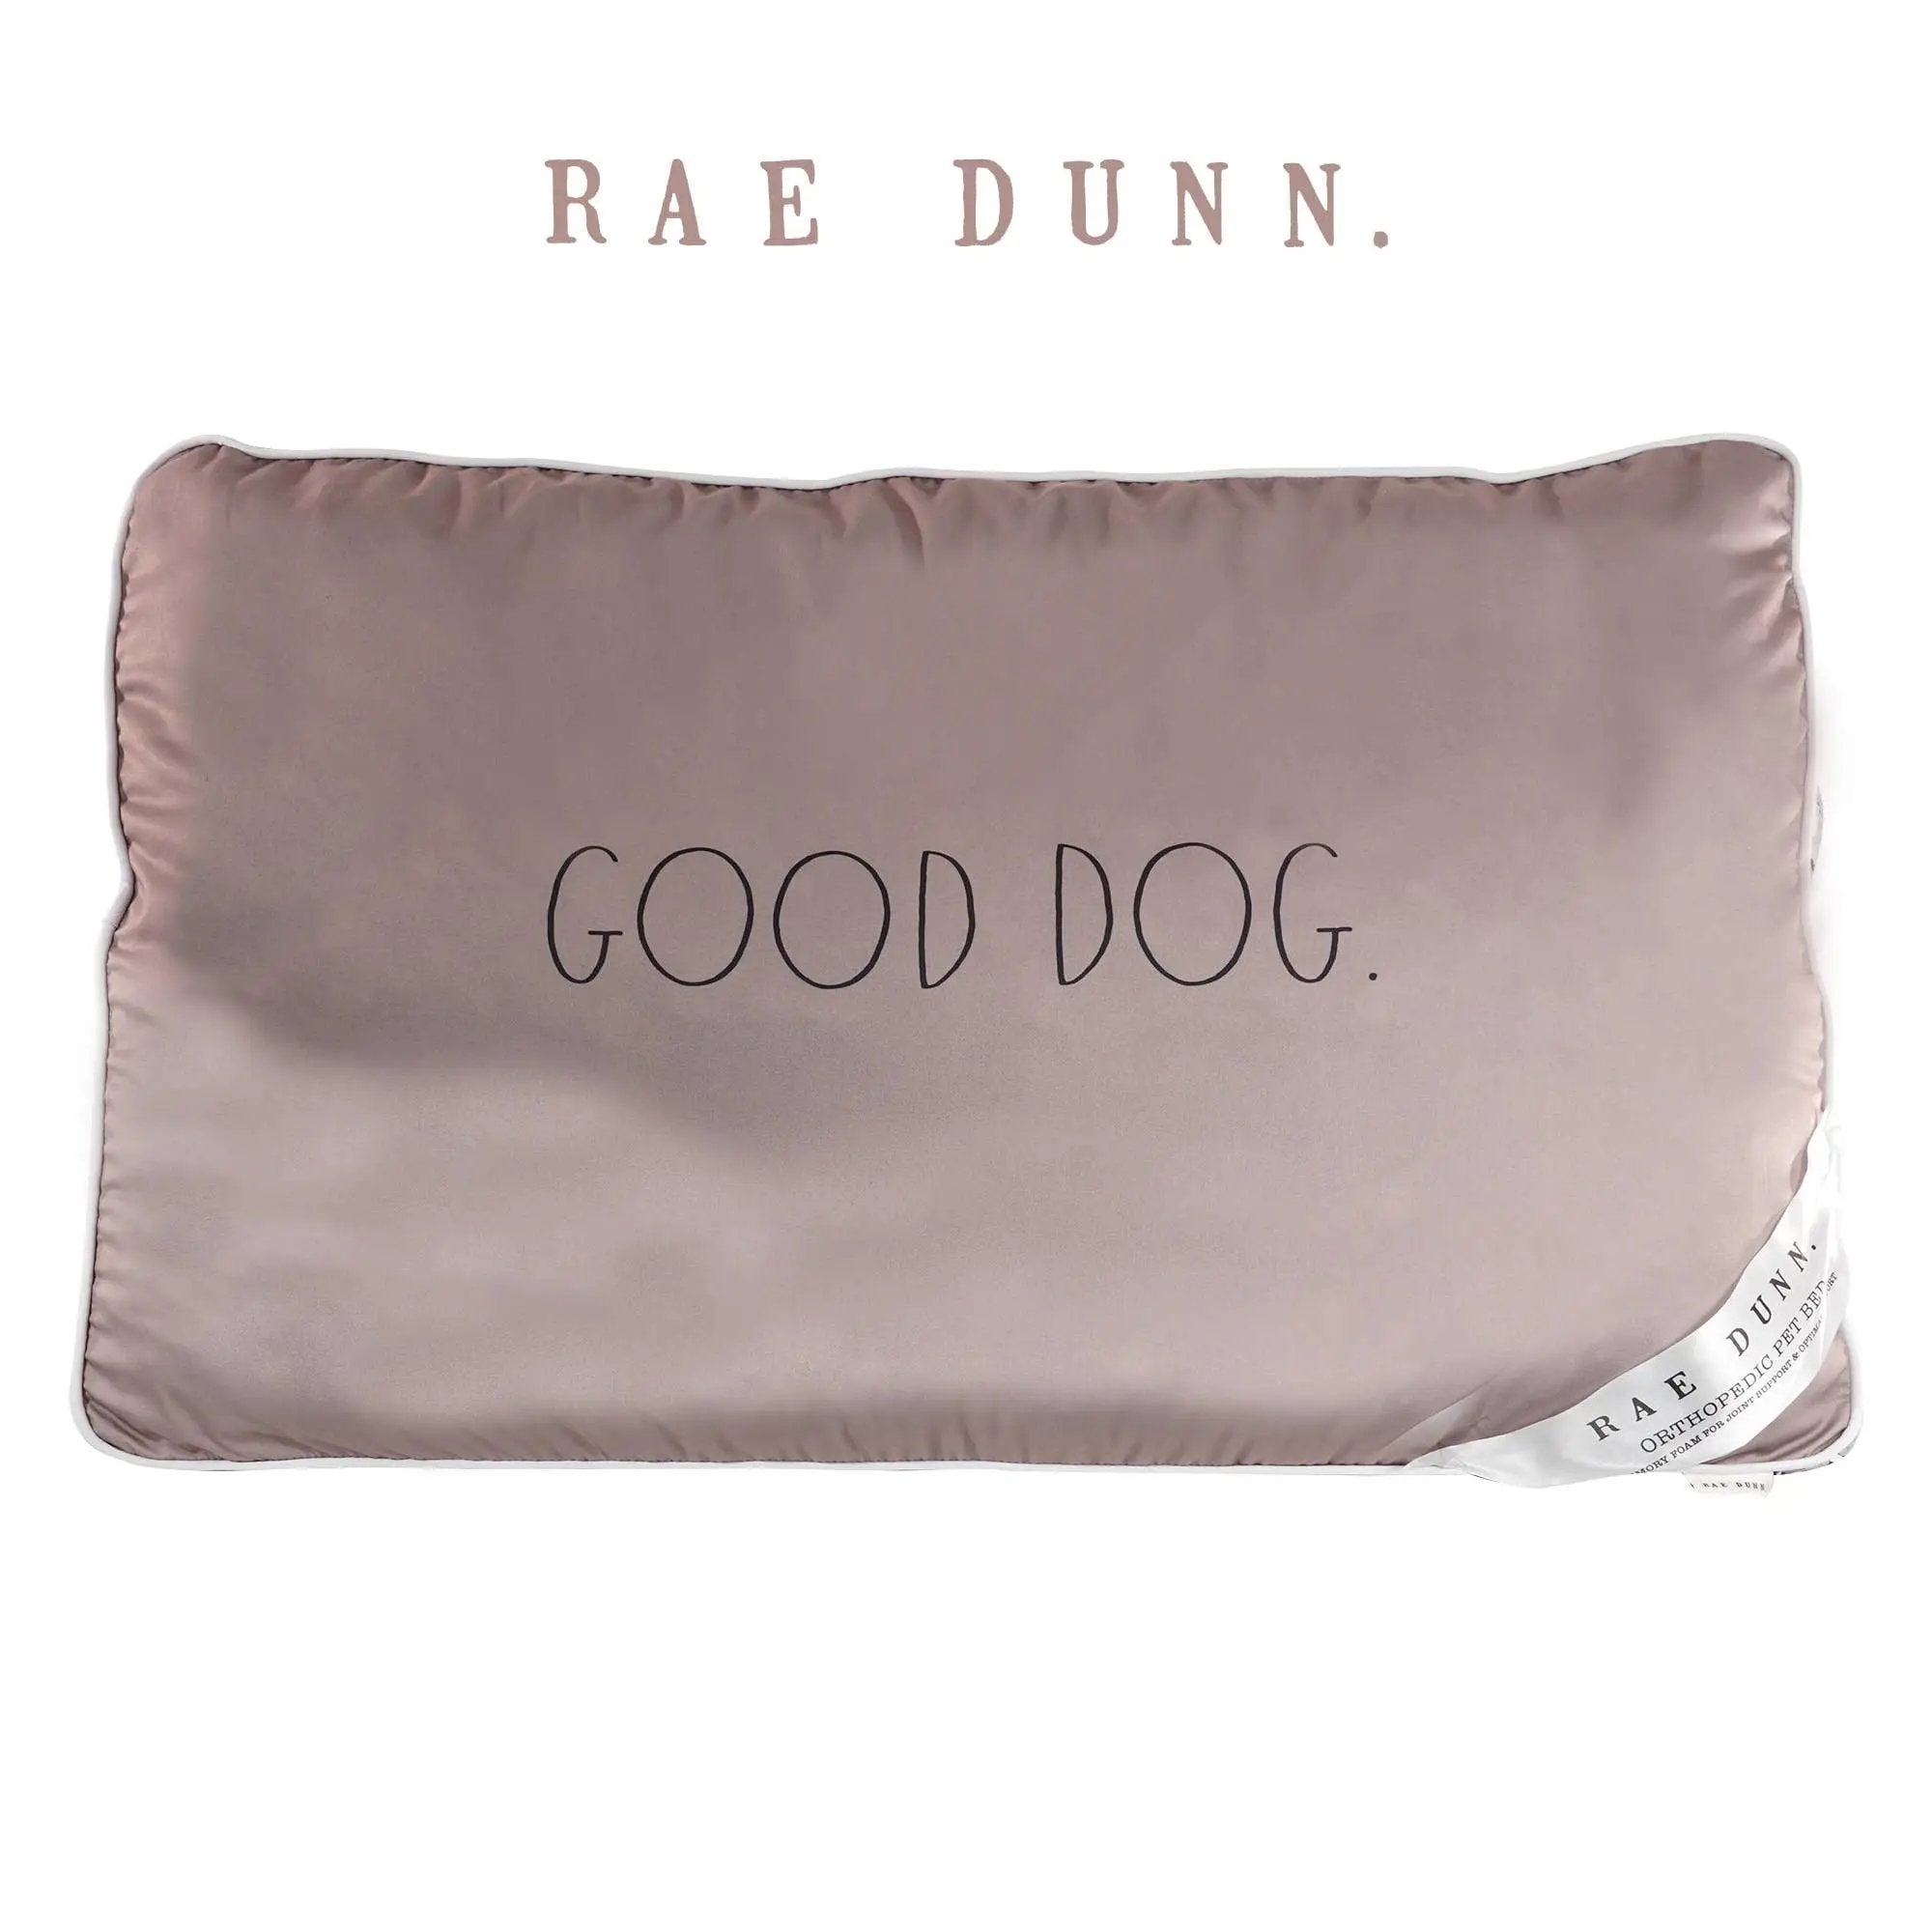 Precious Tails Rae Dunn "Good Dog" Orthopedic Pet Bed